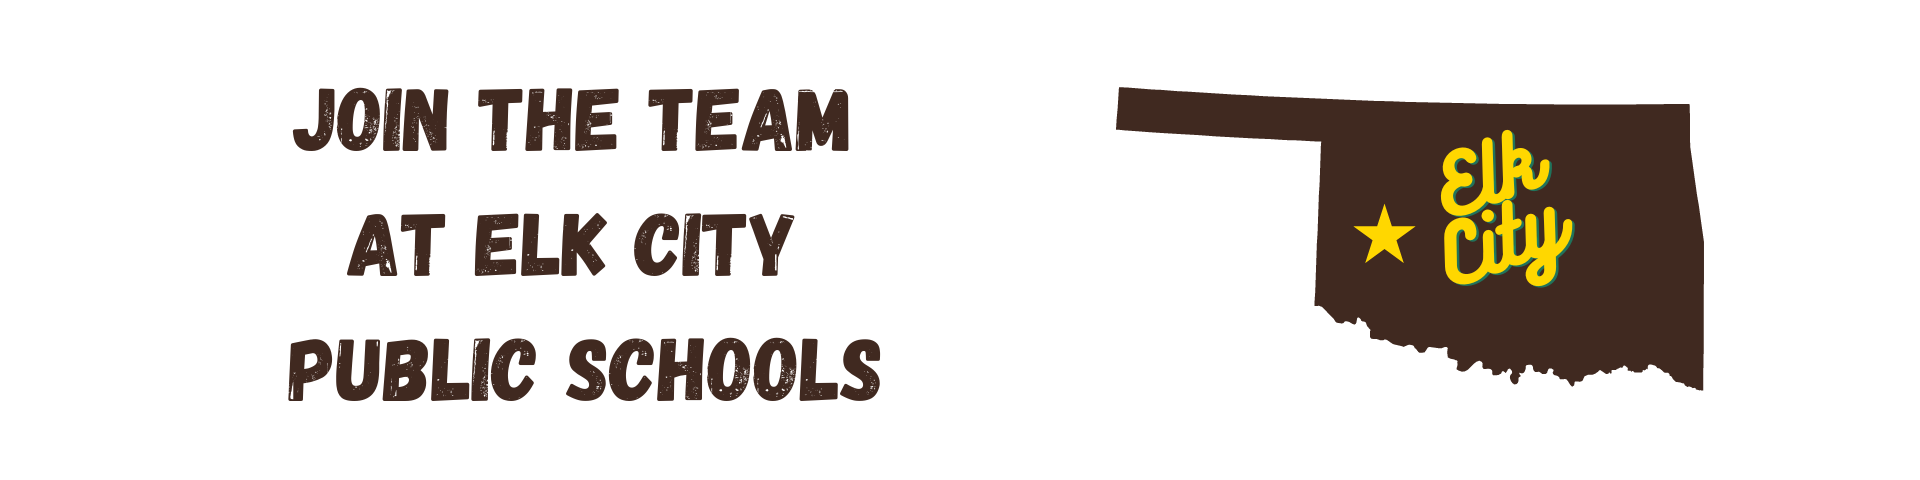 Join the Team at Elk City Public Schools